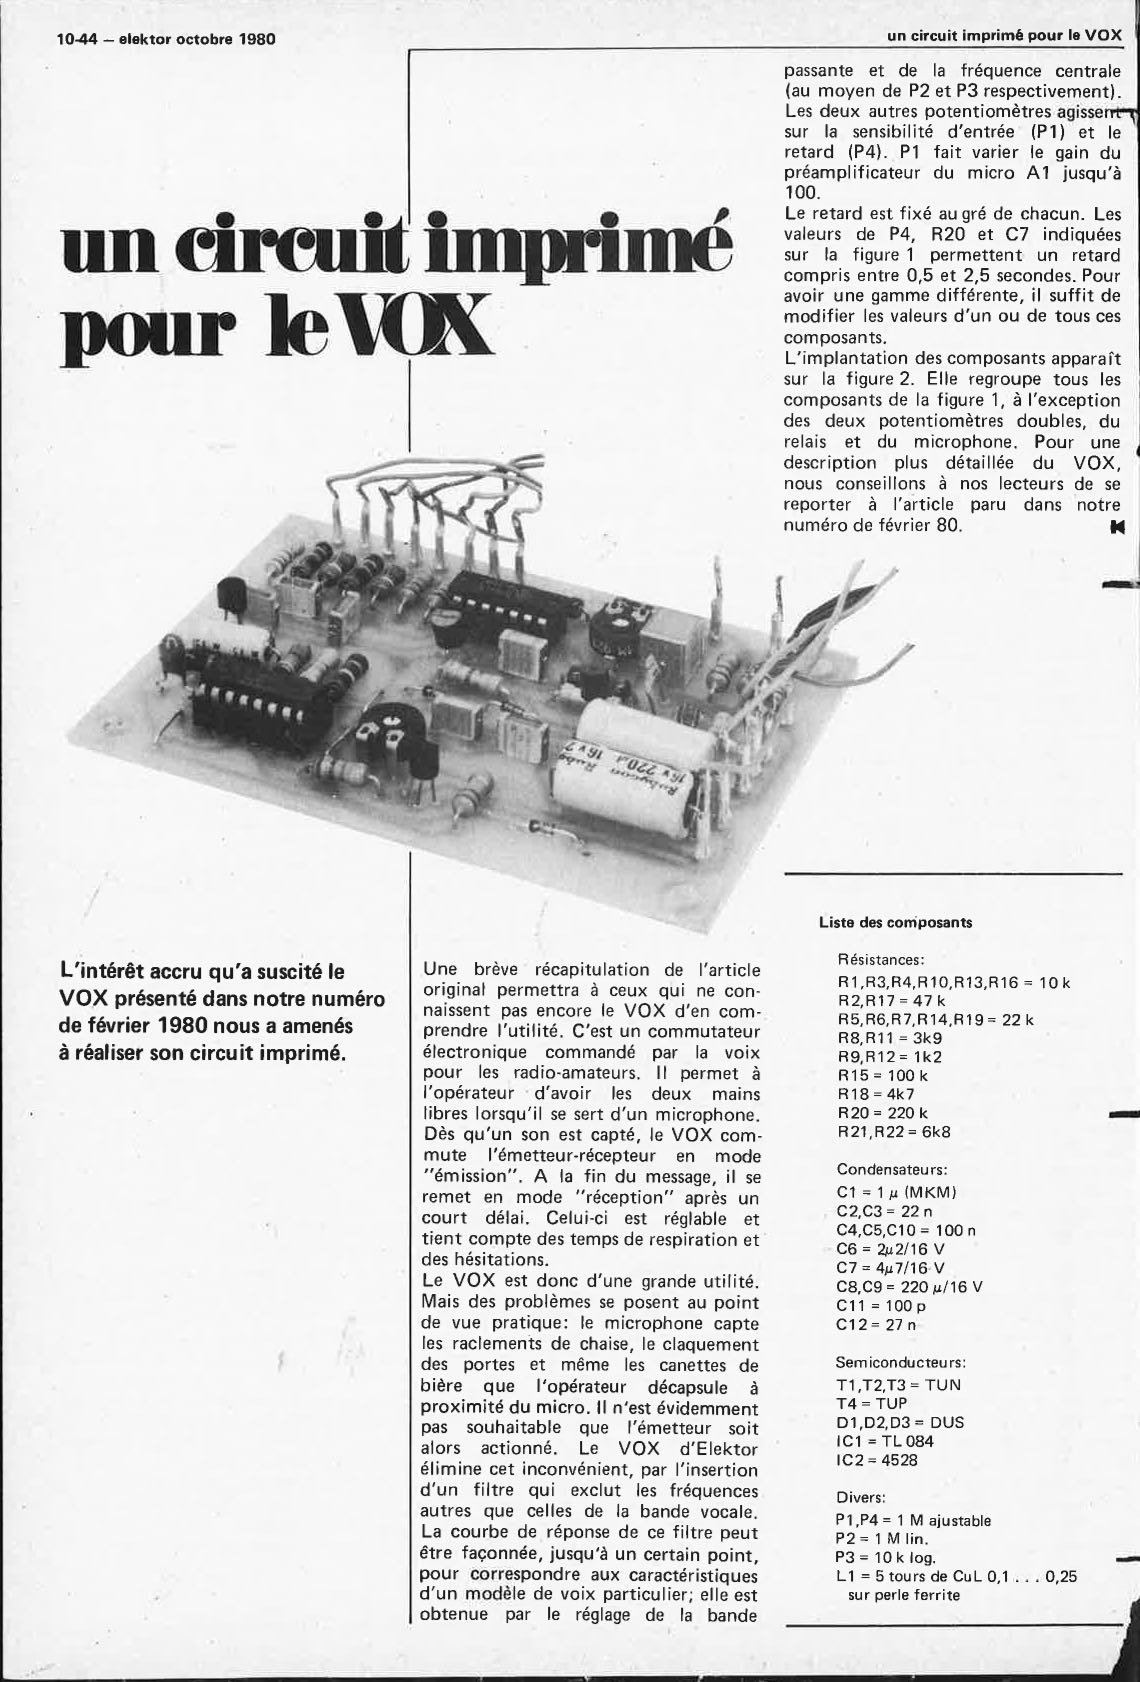 Circuit imprimé du VOX